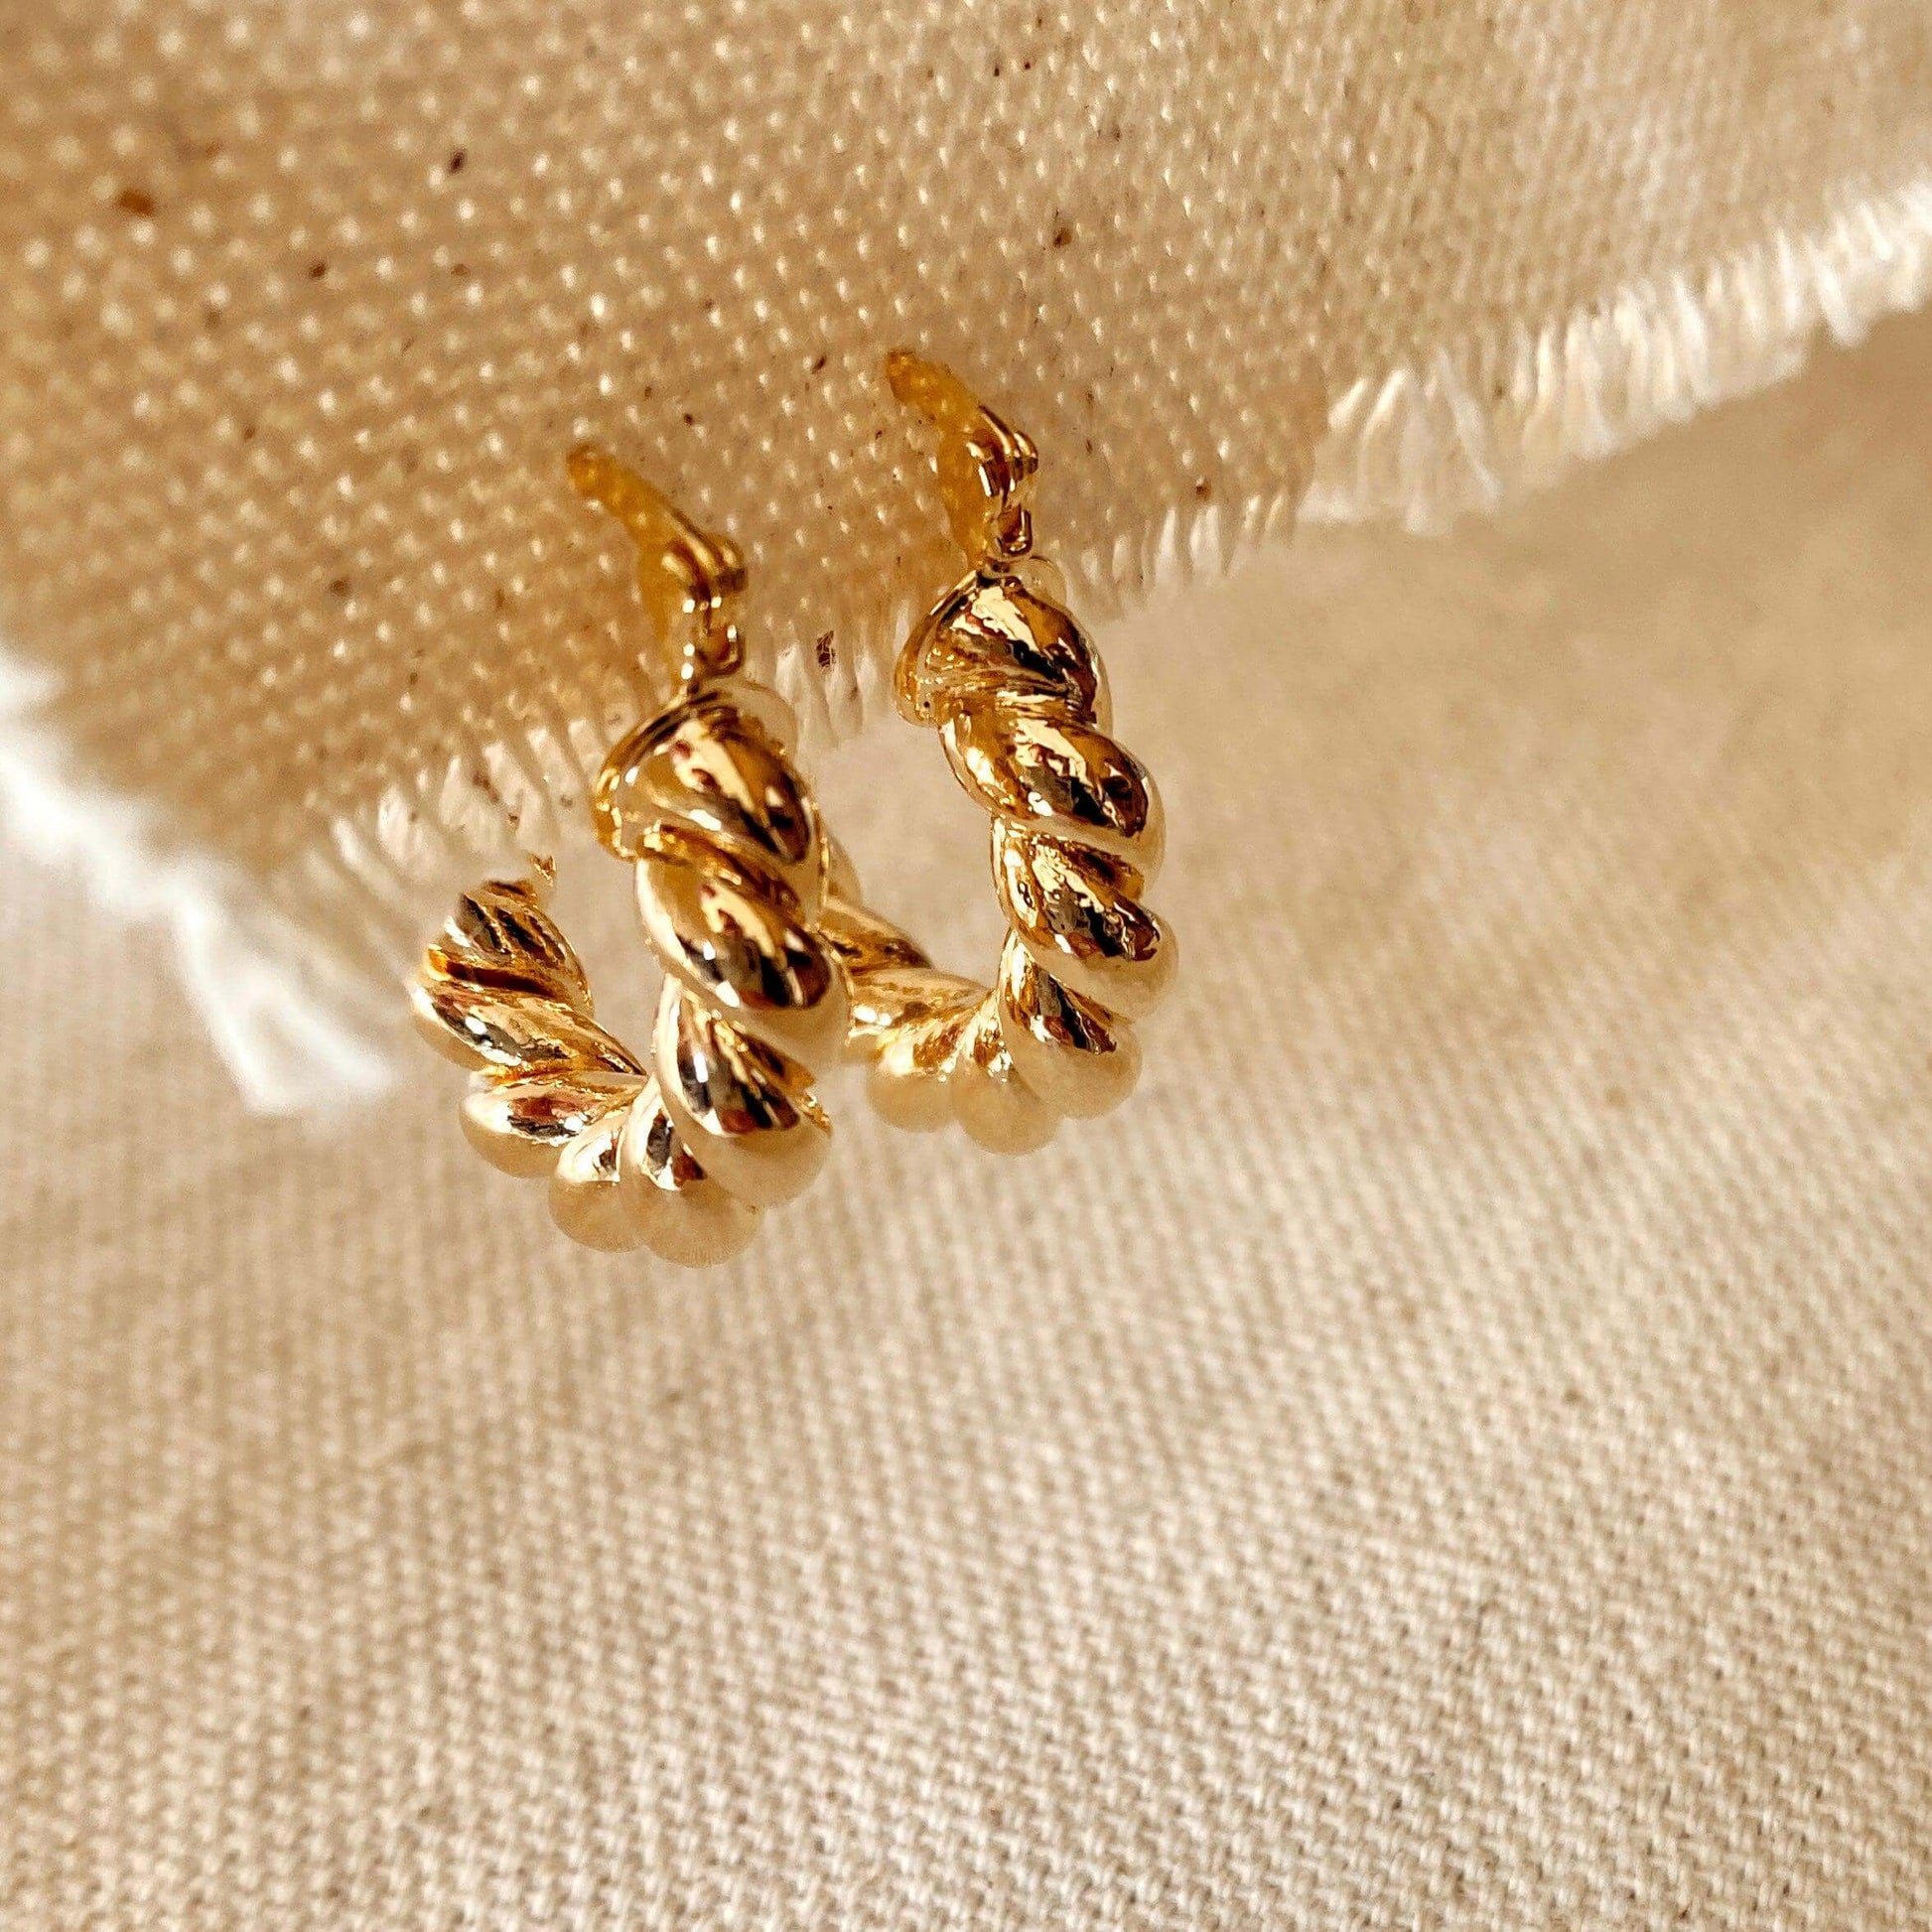 GoldFi 18k Gold Filled Twisted Tube Hoop Earrings - The Croissant Hoops